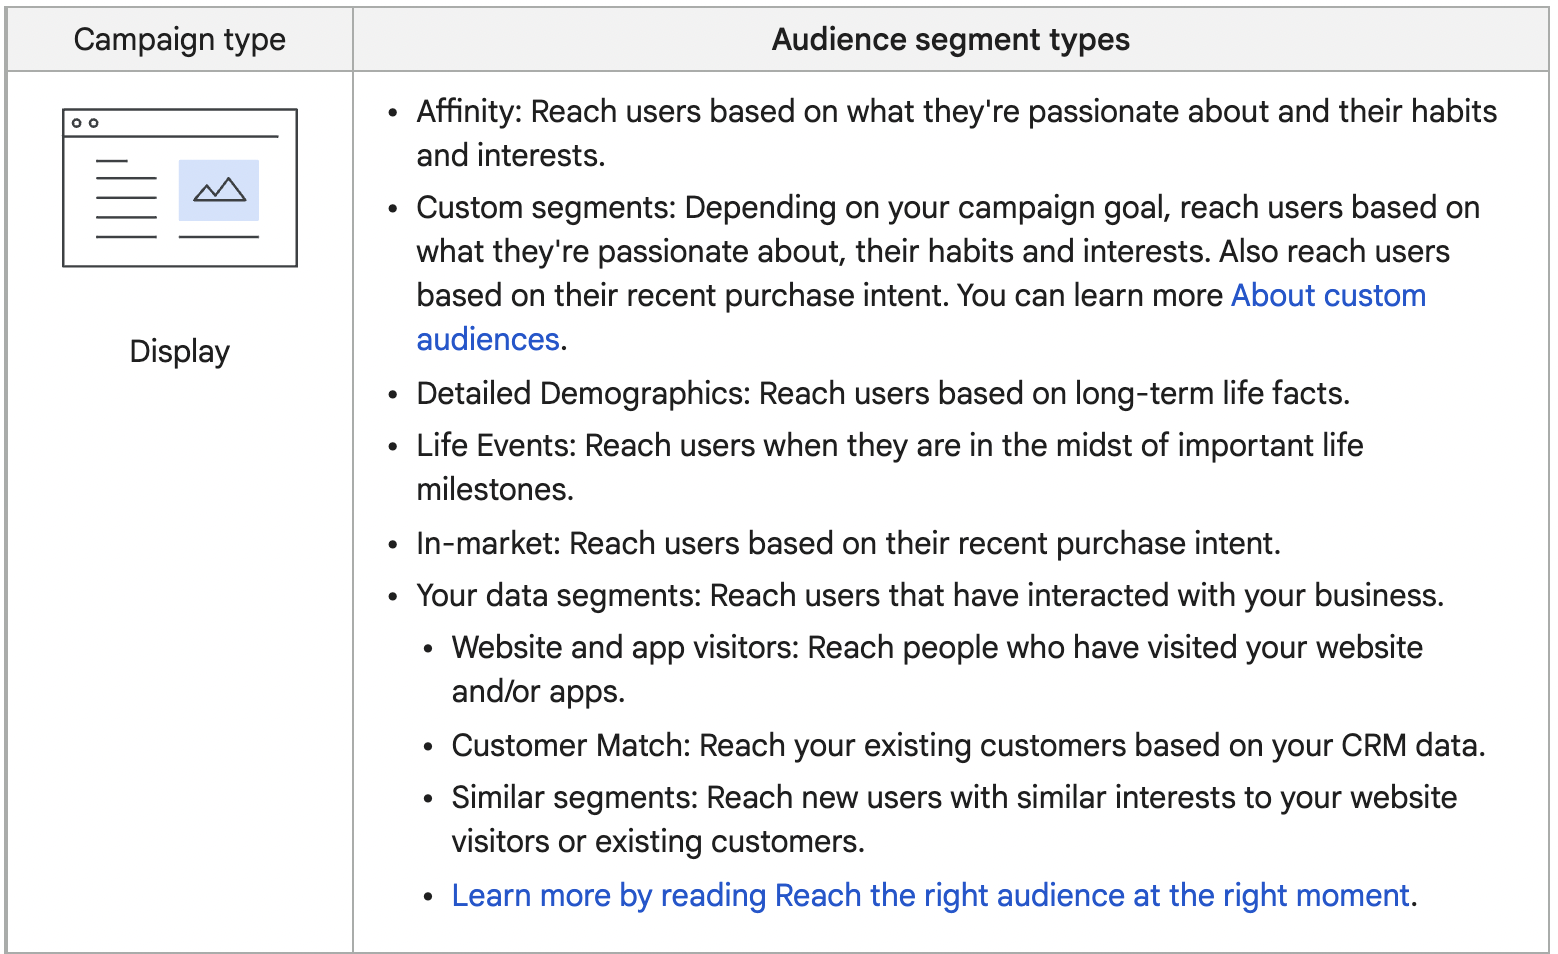 Display audience segment types